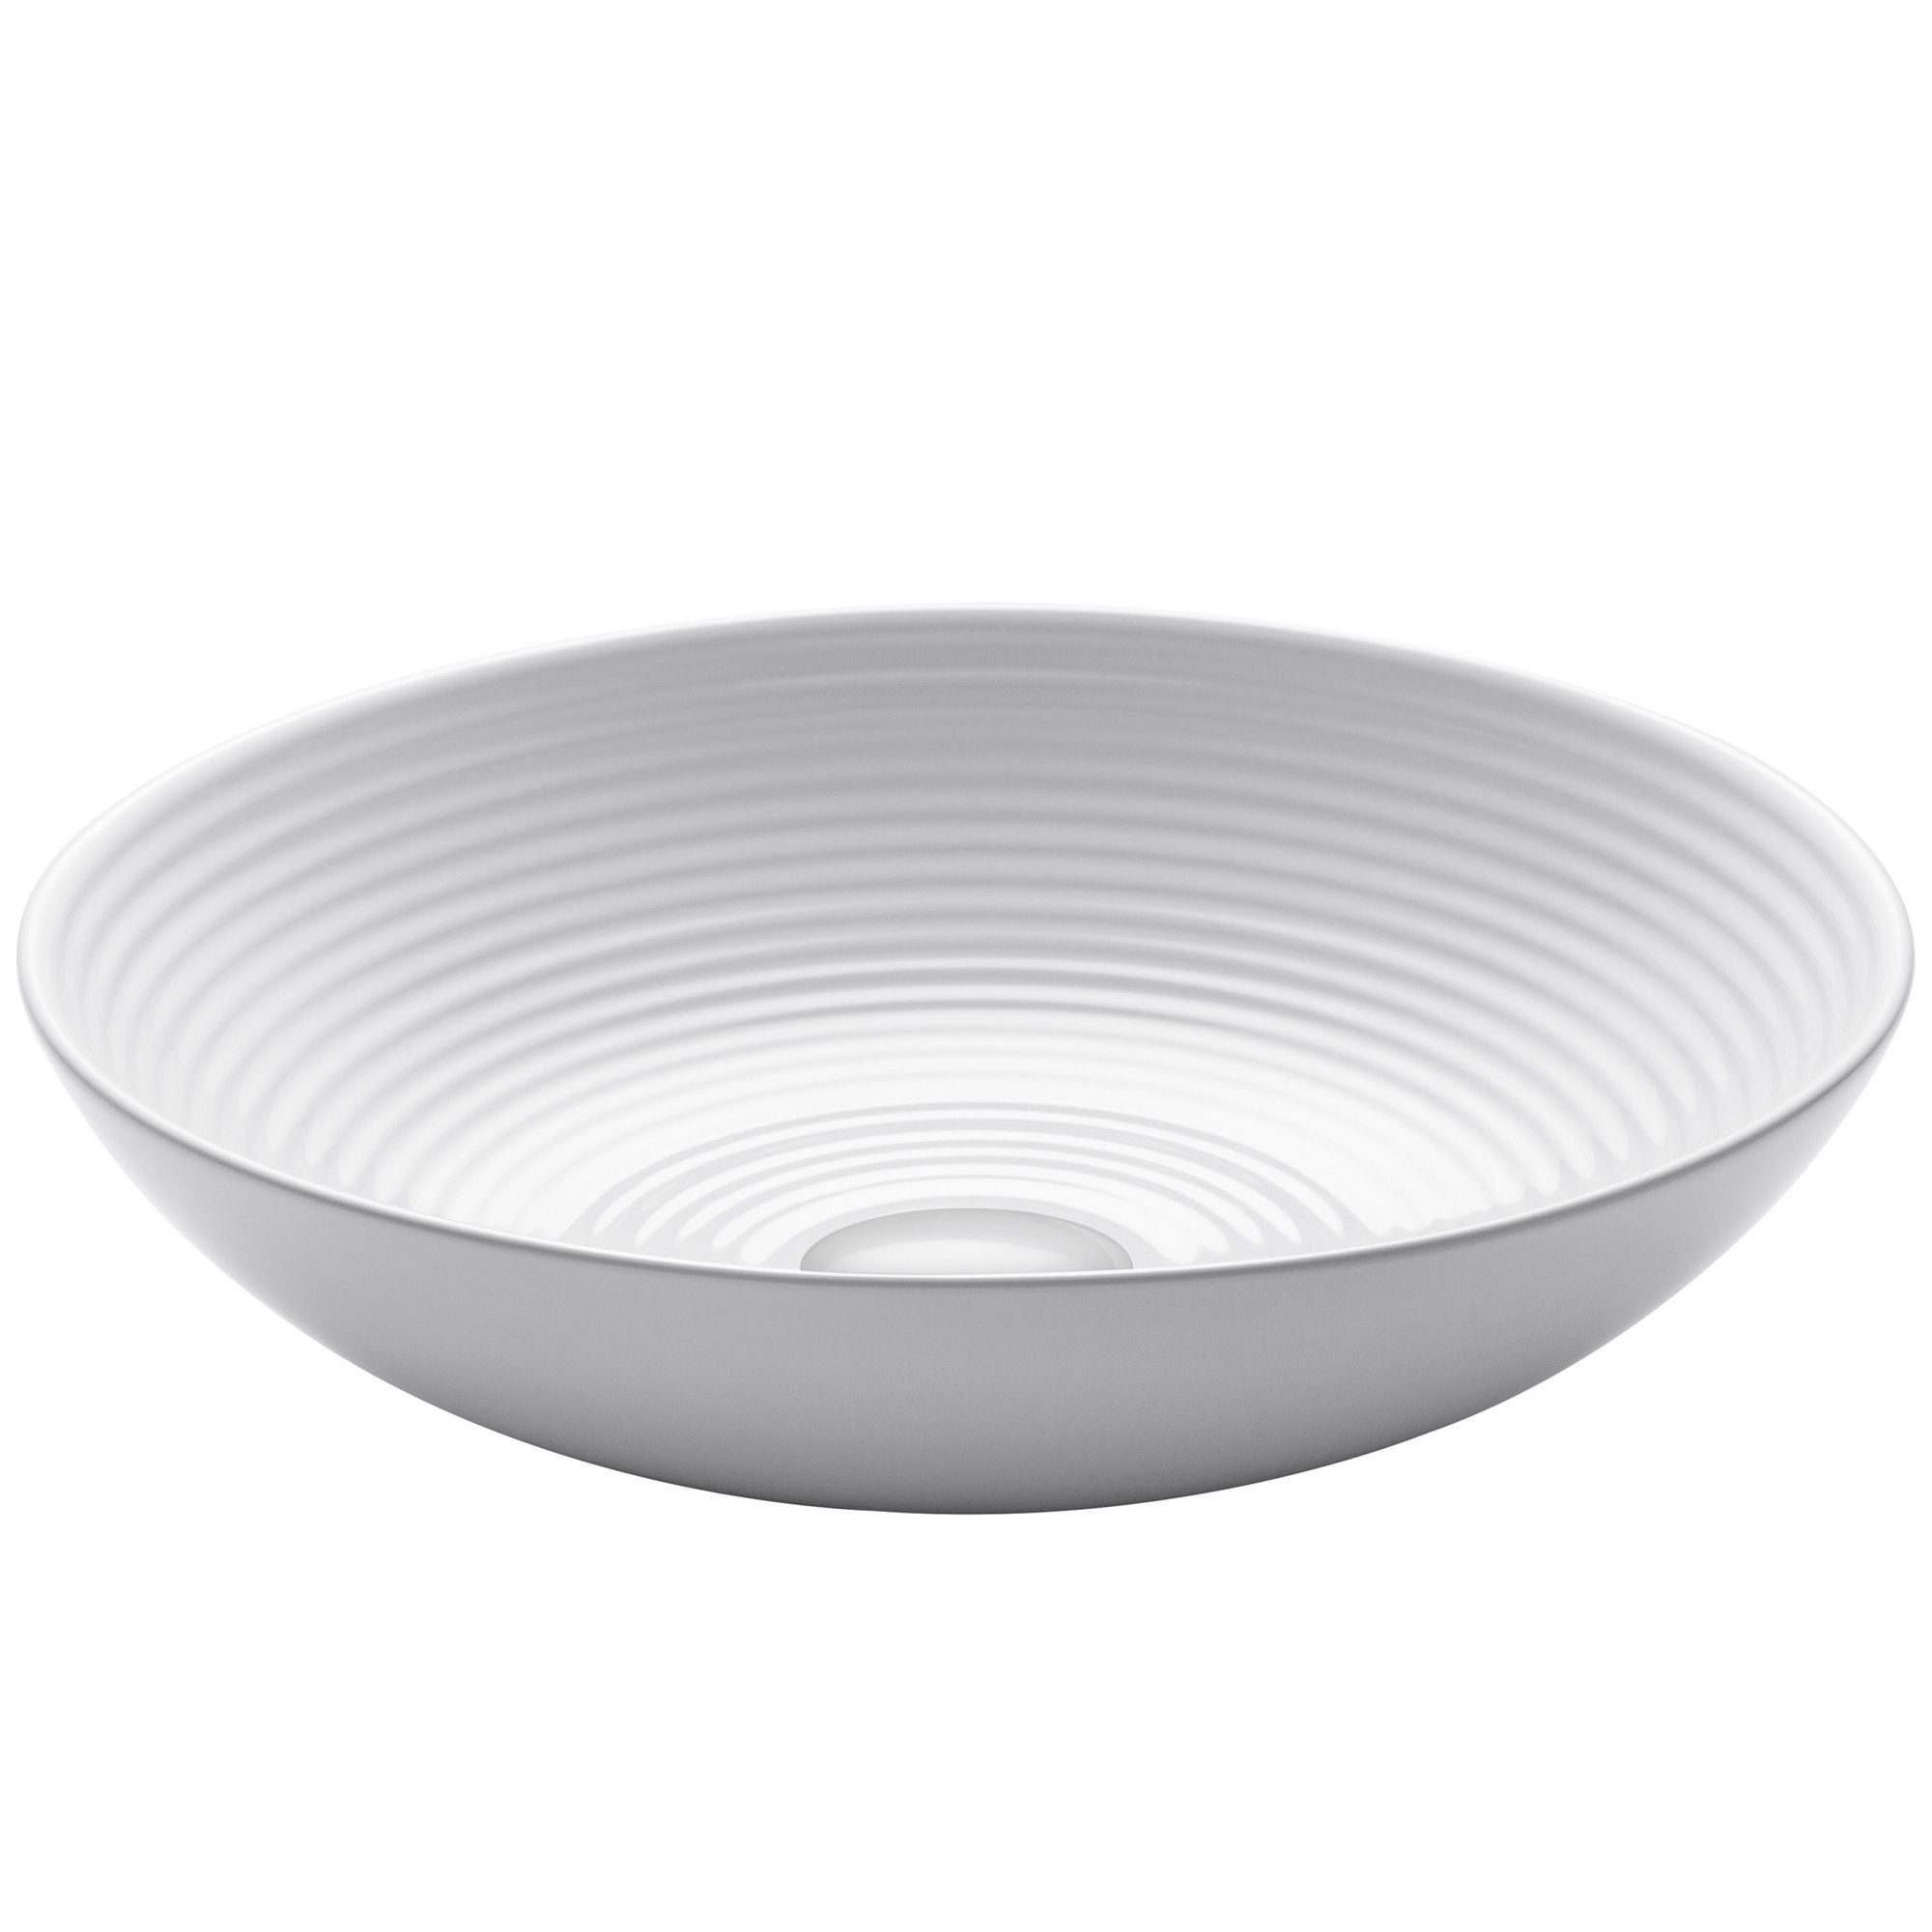 KRAUS Viva„¢ 16.5 Inch Round White Porcelain Ceramic Vessel Bathroom Sink-Bathroom Sinks-KRAUS